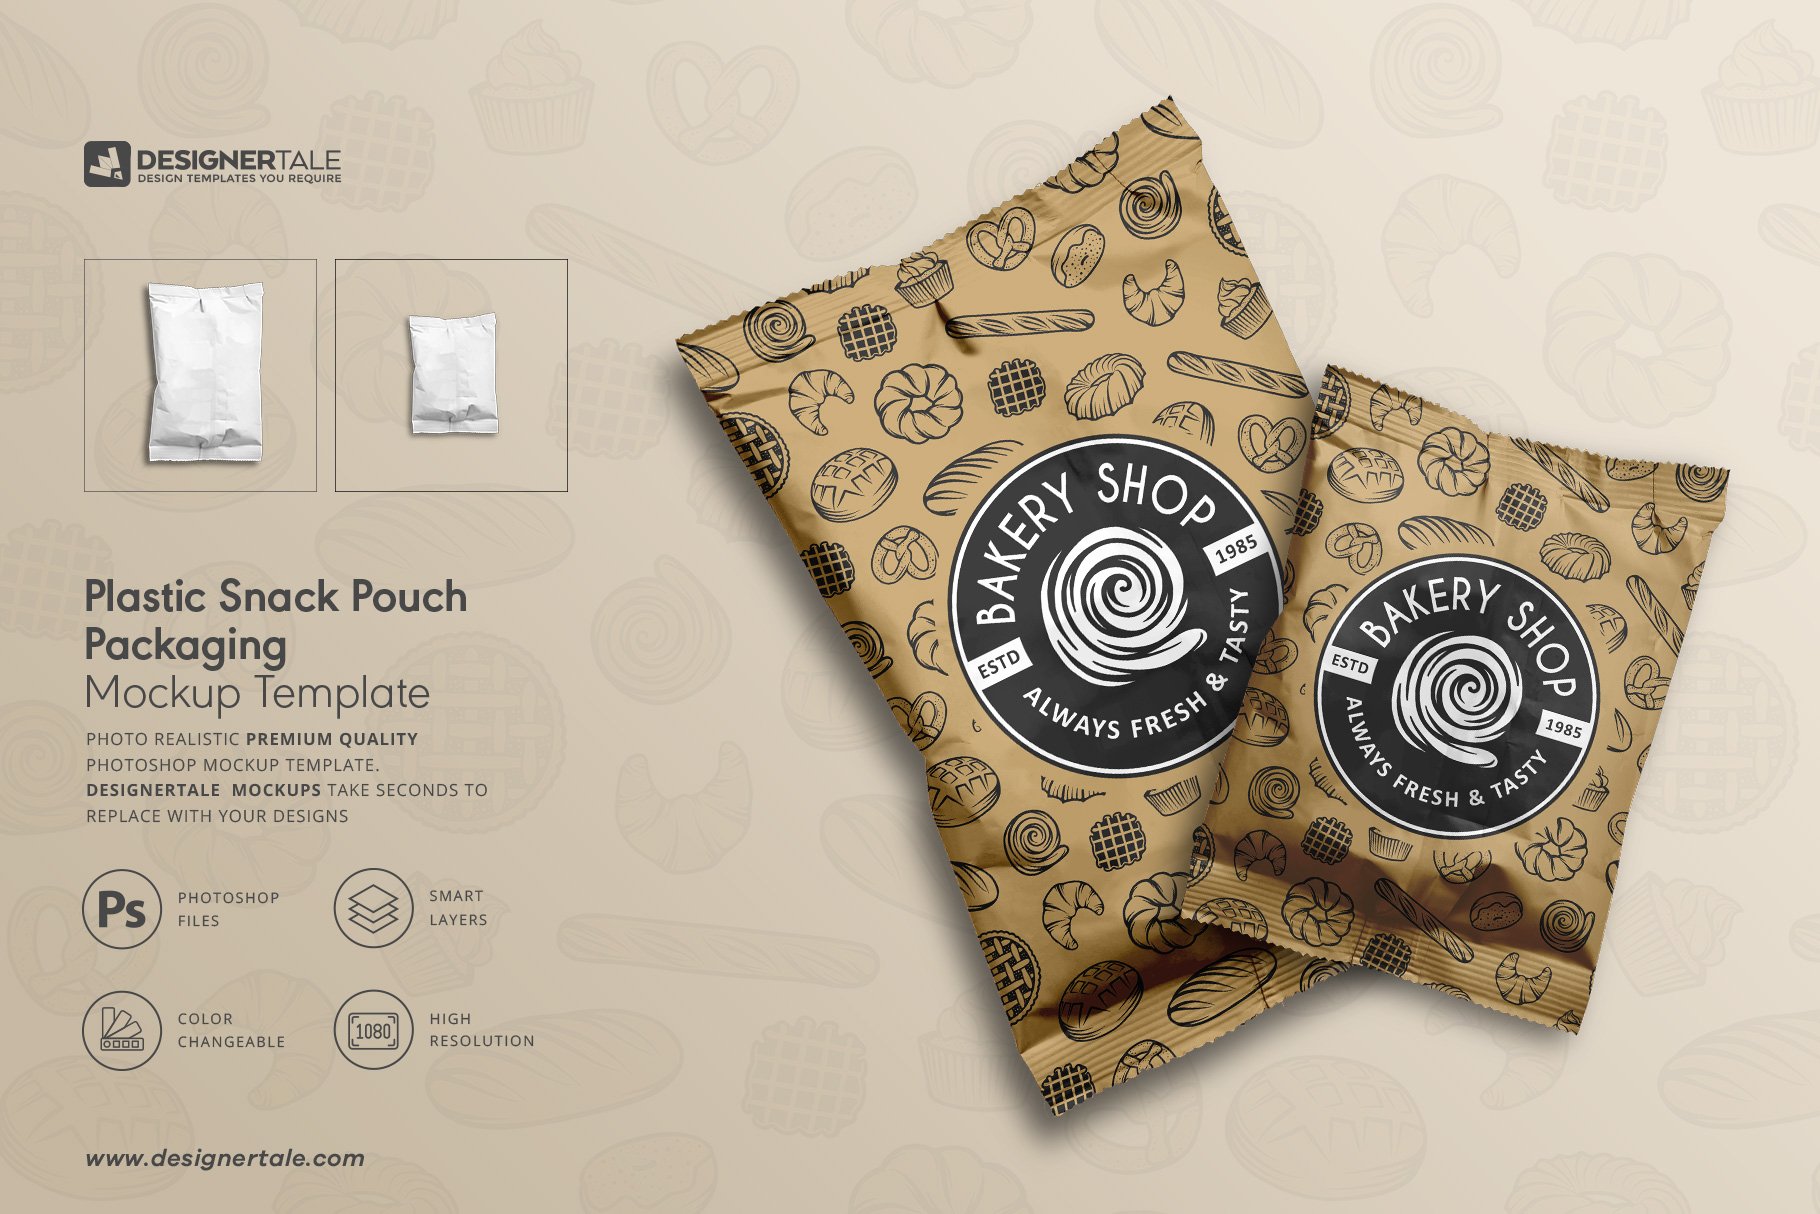 992 塑料零食袋包装样机PSD模型 Plastic Snack Pouch Packaging Mockup